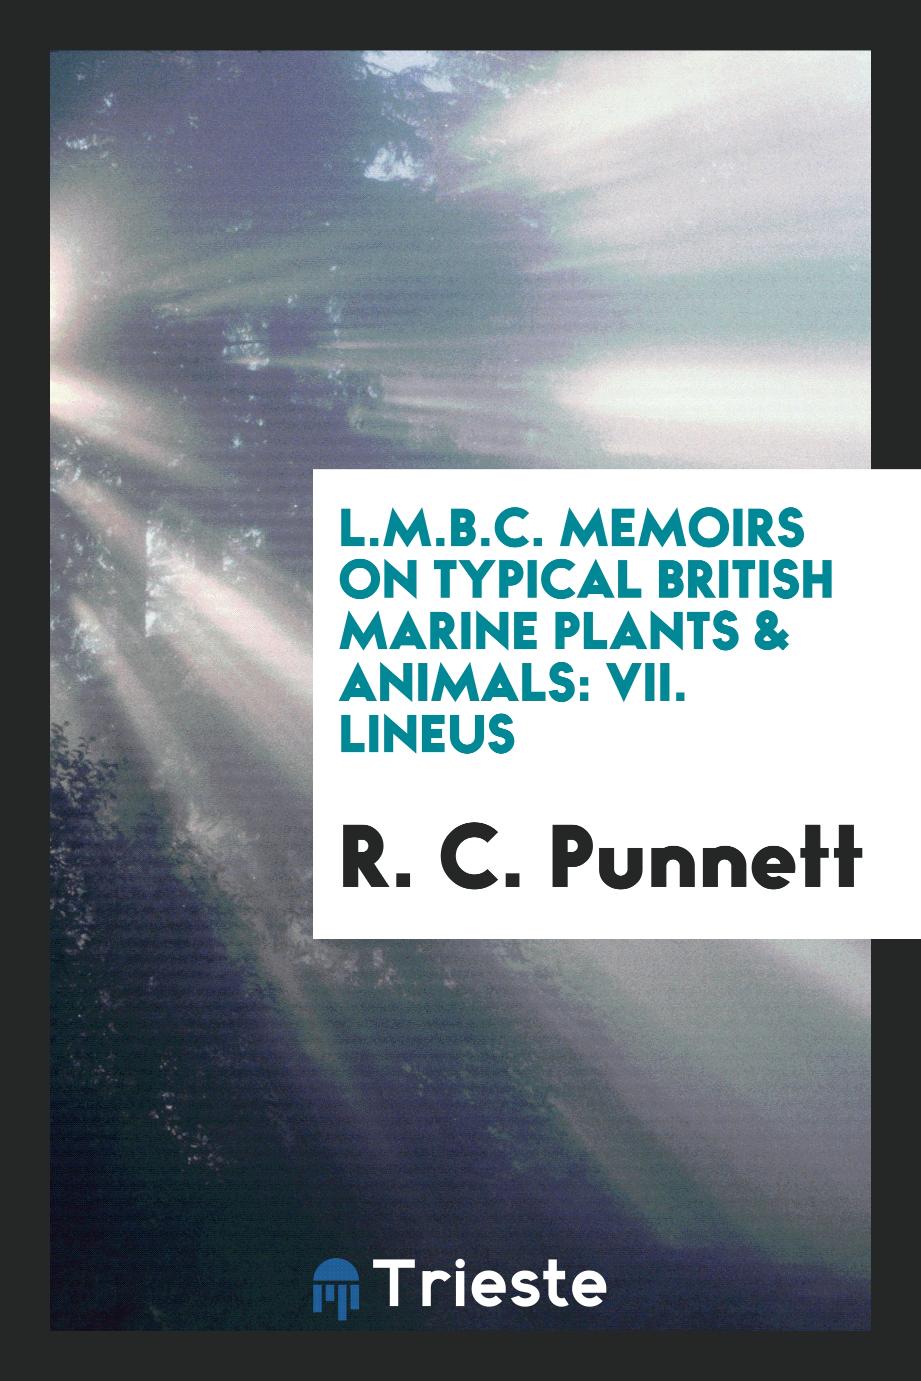 L.M.B.C. Memoirs on typical British Marine Plants & Animals: VII. Lineus